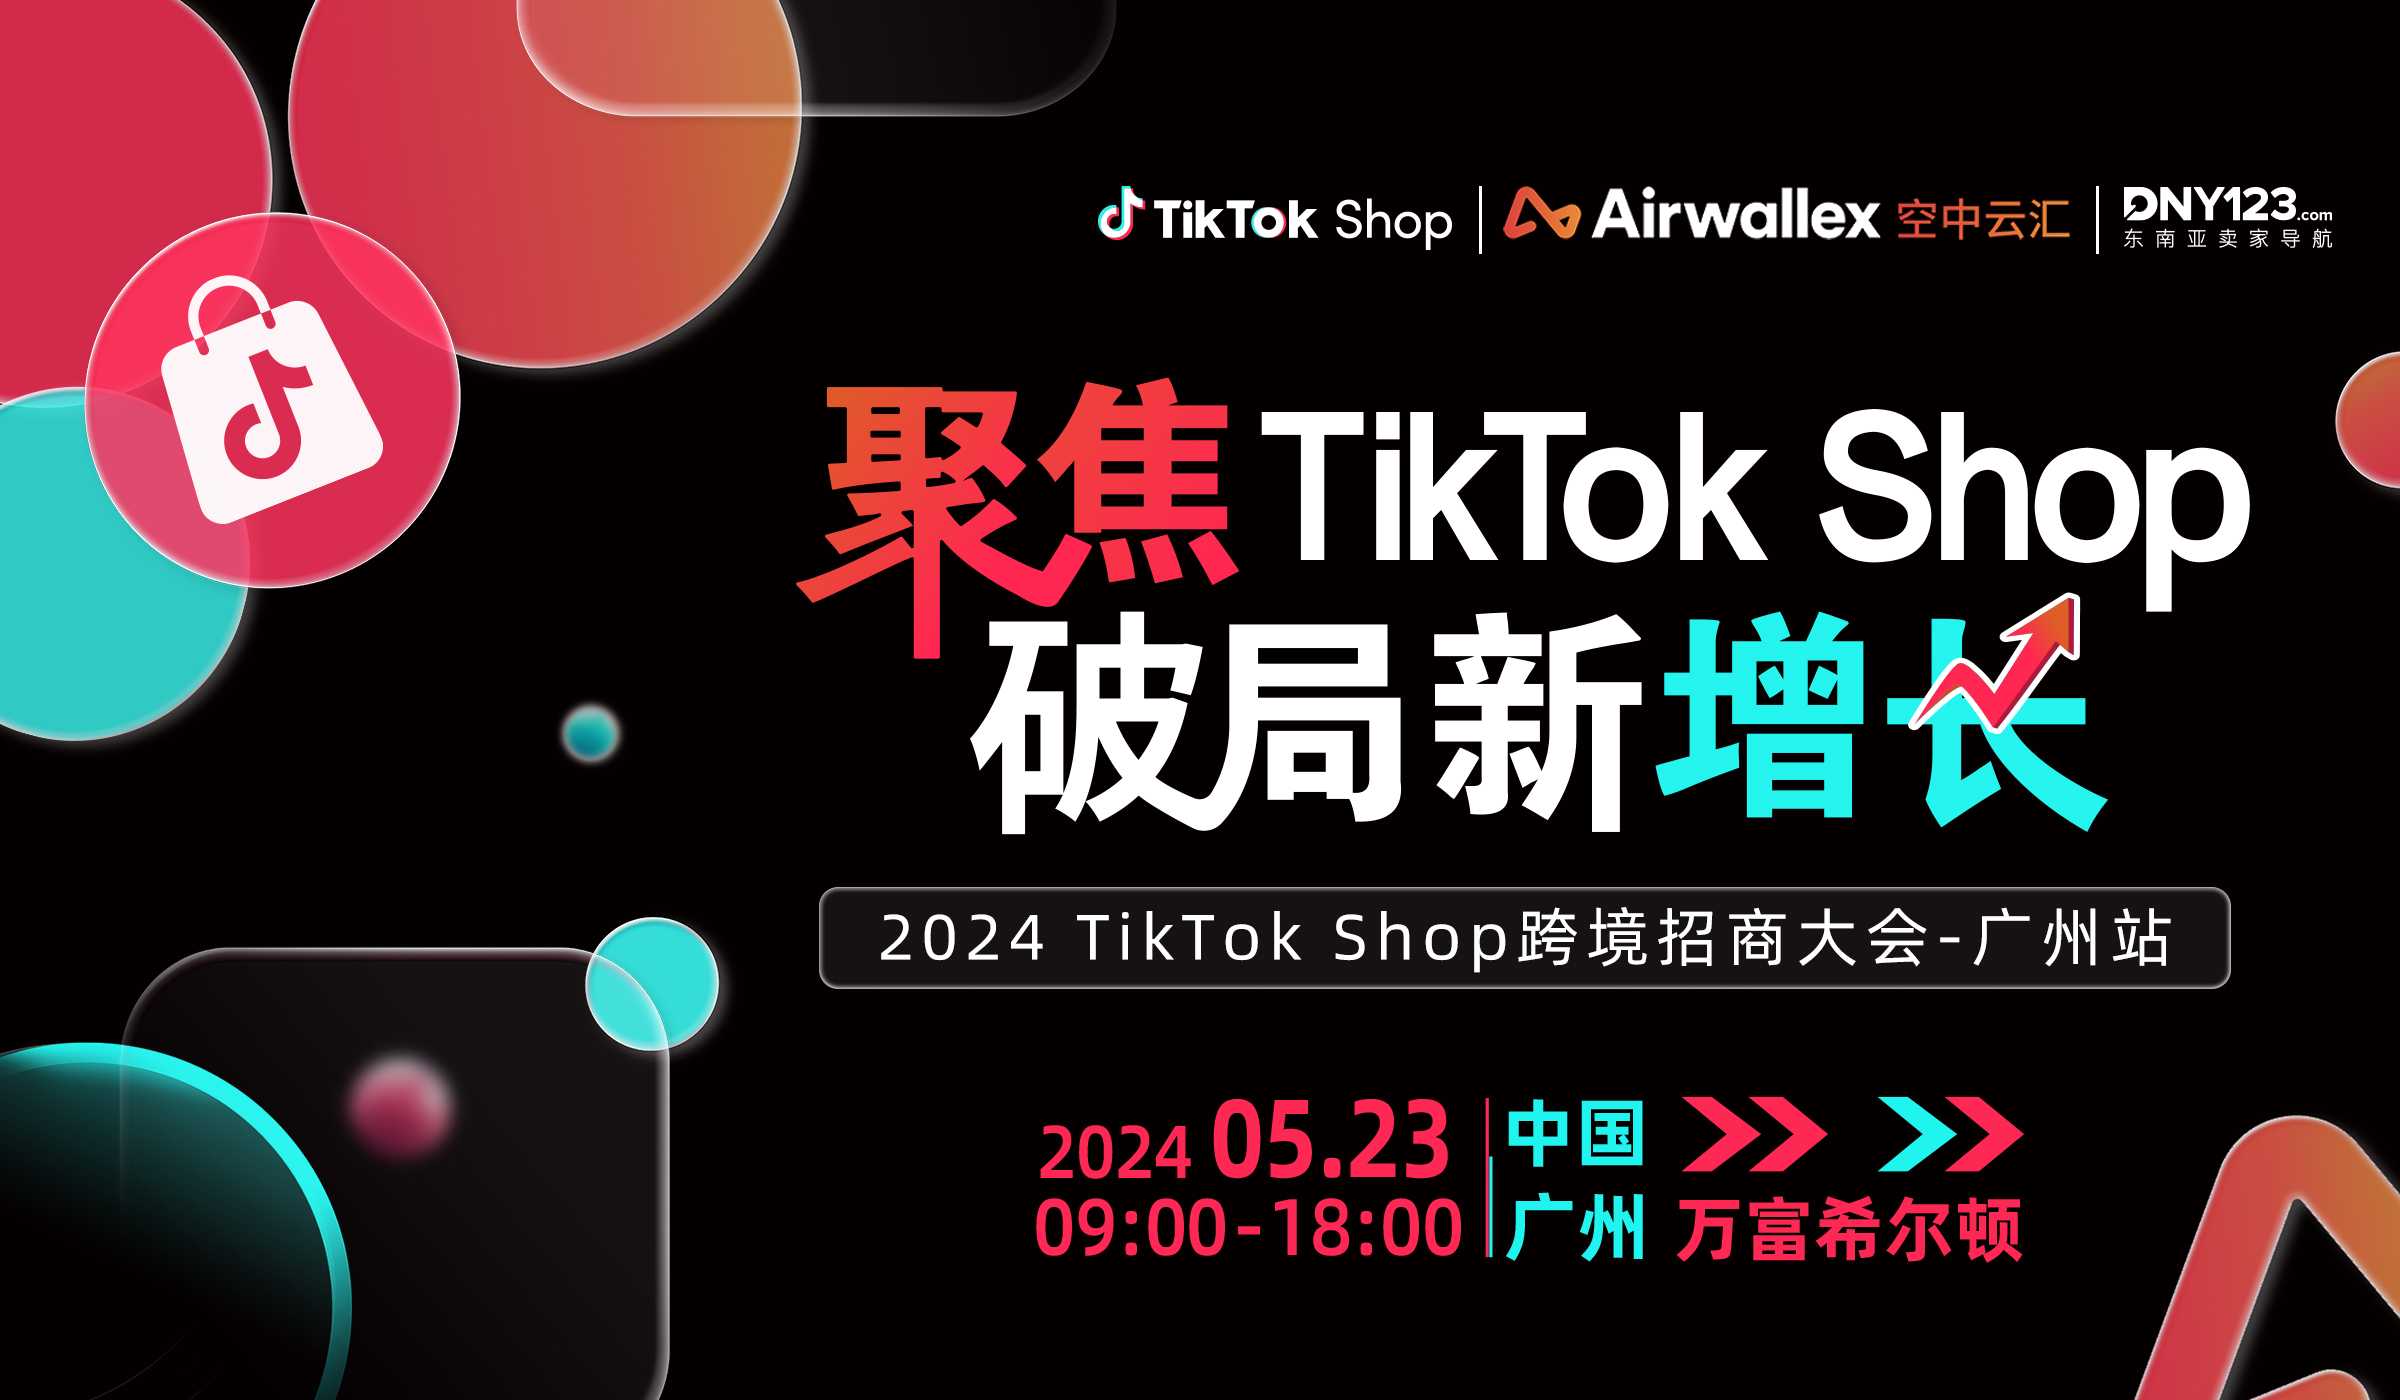 【TikTok Shop菲跃计划】全面助力TikTok Shop菲律宾本土市场商家加速爆发!